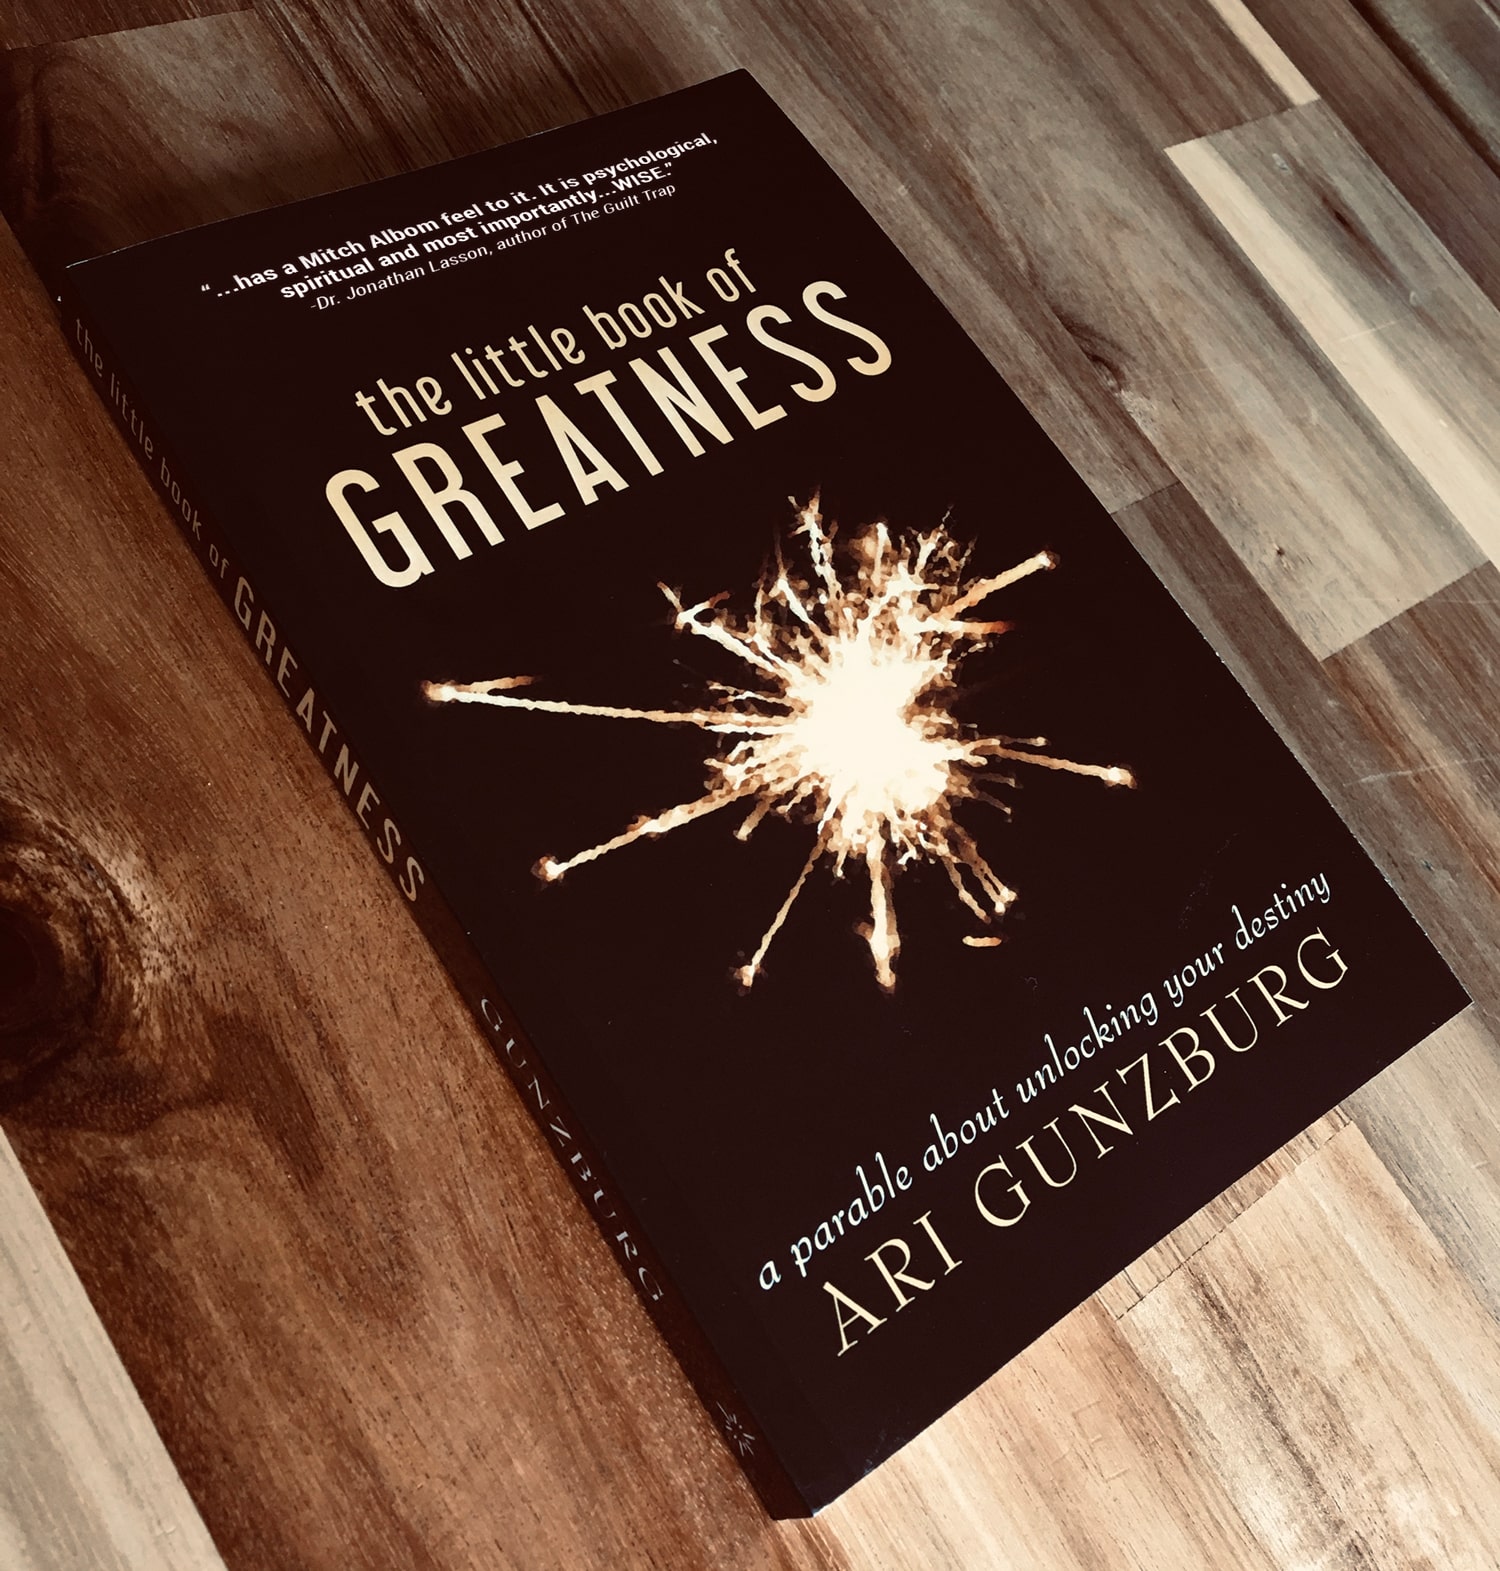 greatness-book-photo-pr2020-min